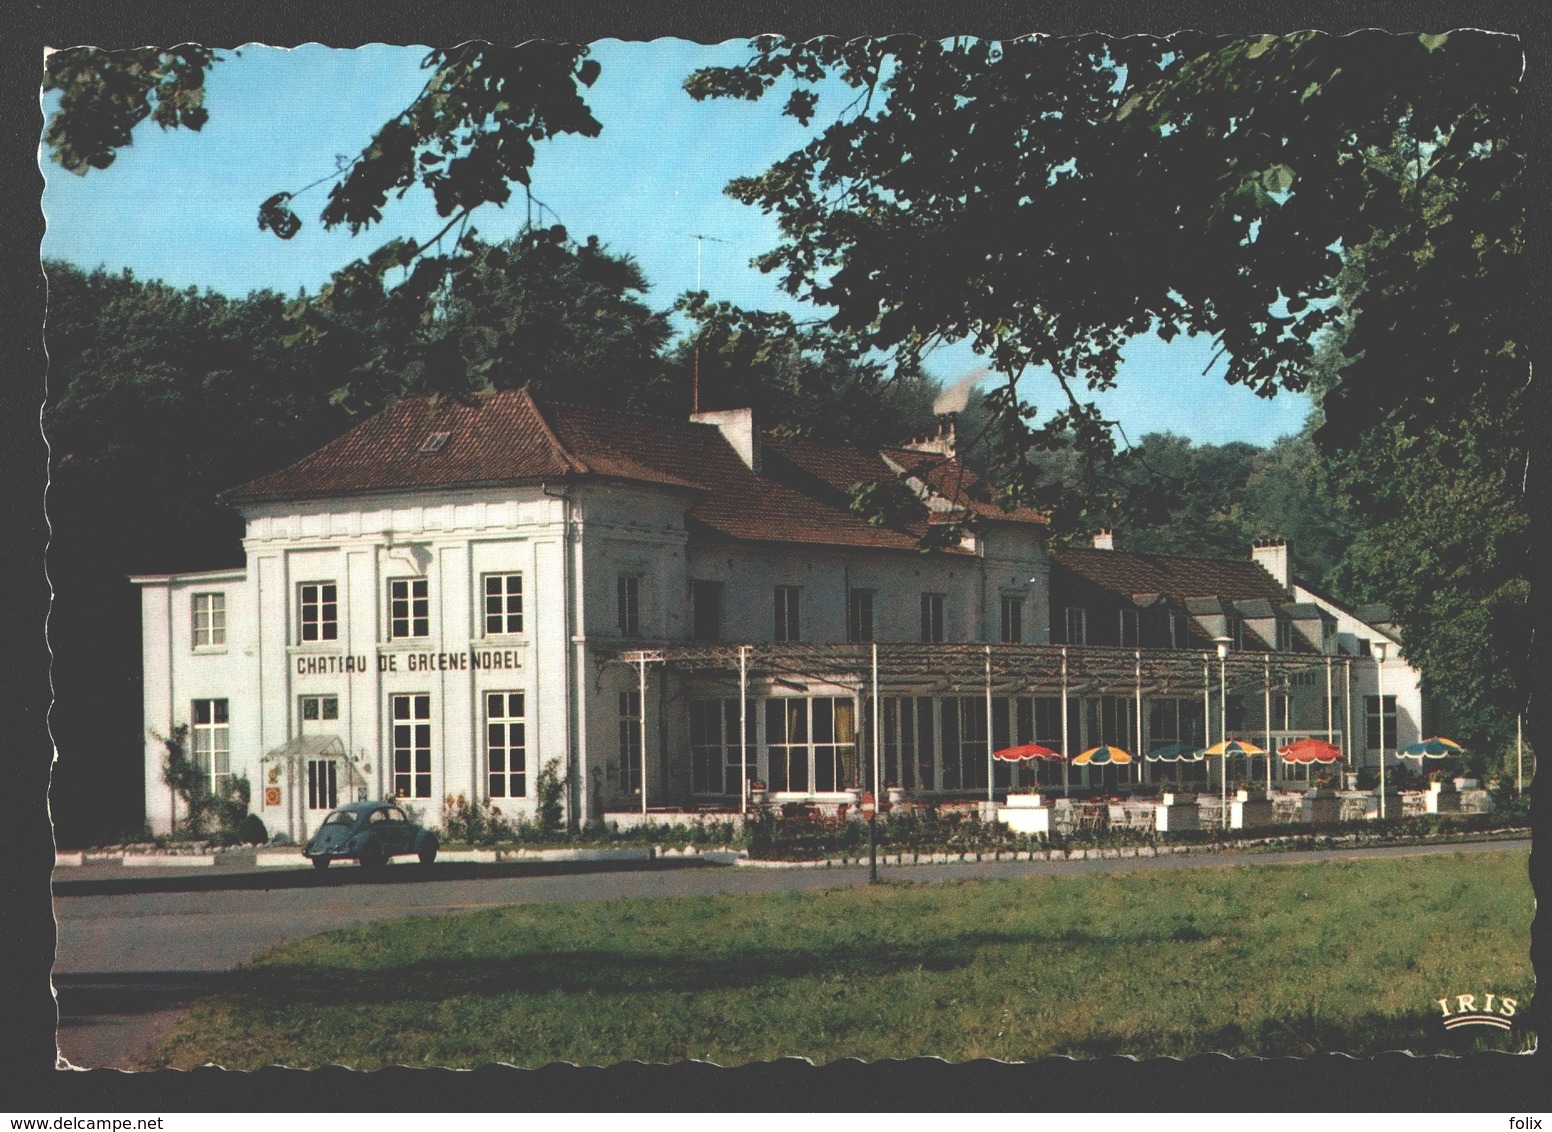 Hoeilaart - Château De Groenendael - Hôtel Restaurant Rose - Car / Auto VW Kever / Coccinelle / Beetle - Hoeilaart